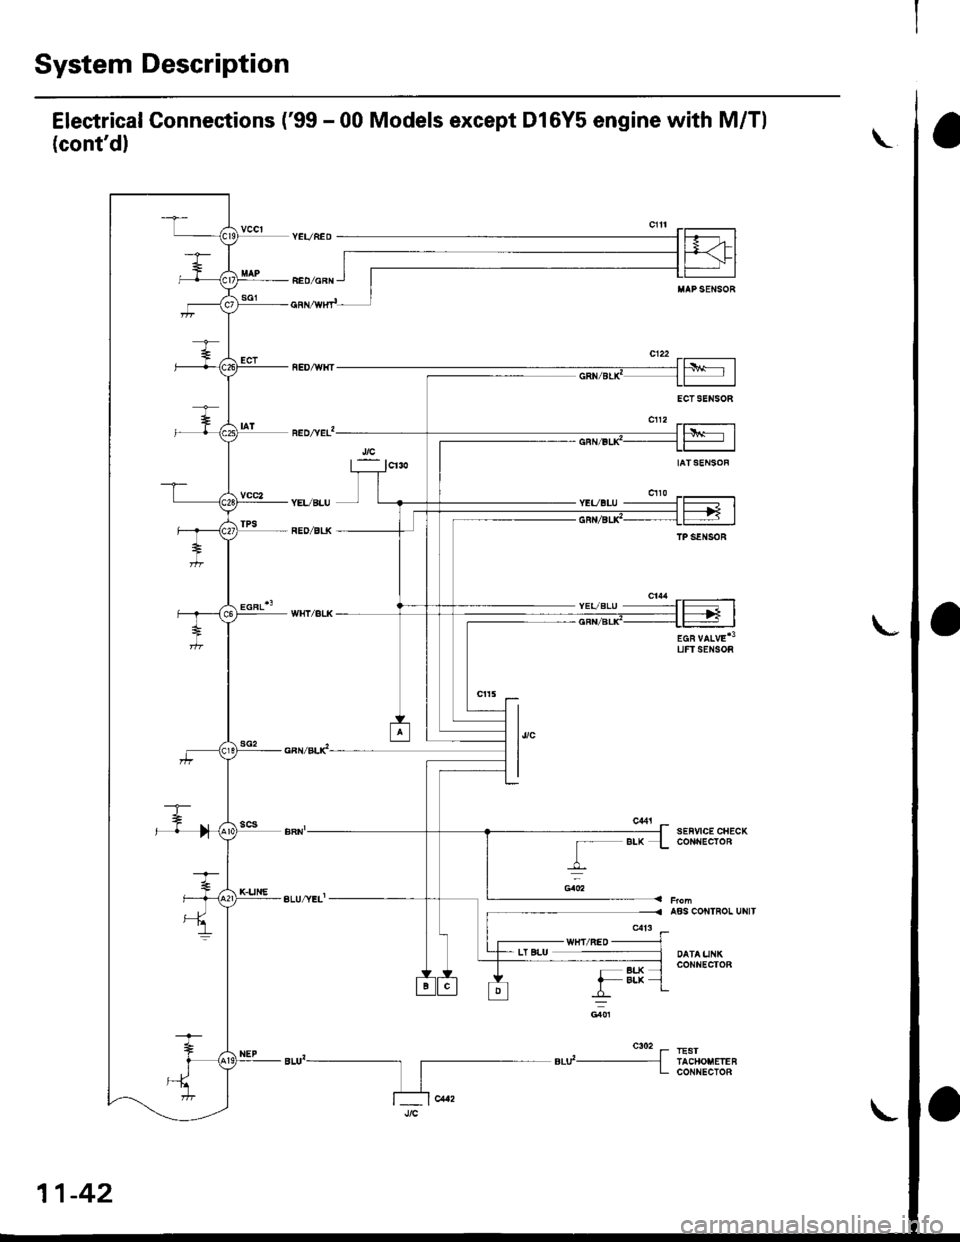 HONDA CIVIC 1997 6.G User Guide System Description
Electrical Connections (99 - 00 Models except D16Y5 engine with M/Tl
(contdl
UFTSENSOR
L
ABS CONTROL UNIT
CONI{ECTOR- BLX
_r "*
\
sEnucE cSEcKCONNECOR
11-42
aLul- _--r ".* 
"to 